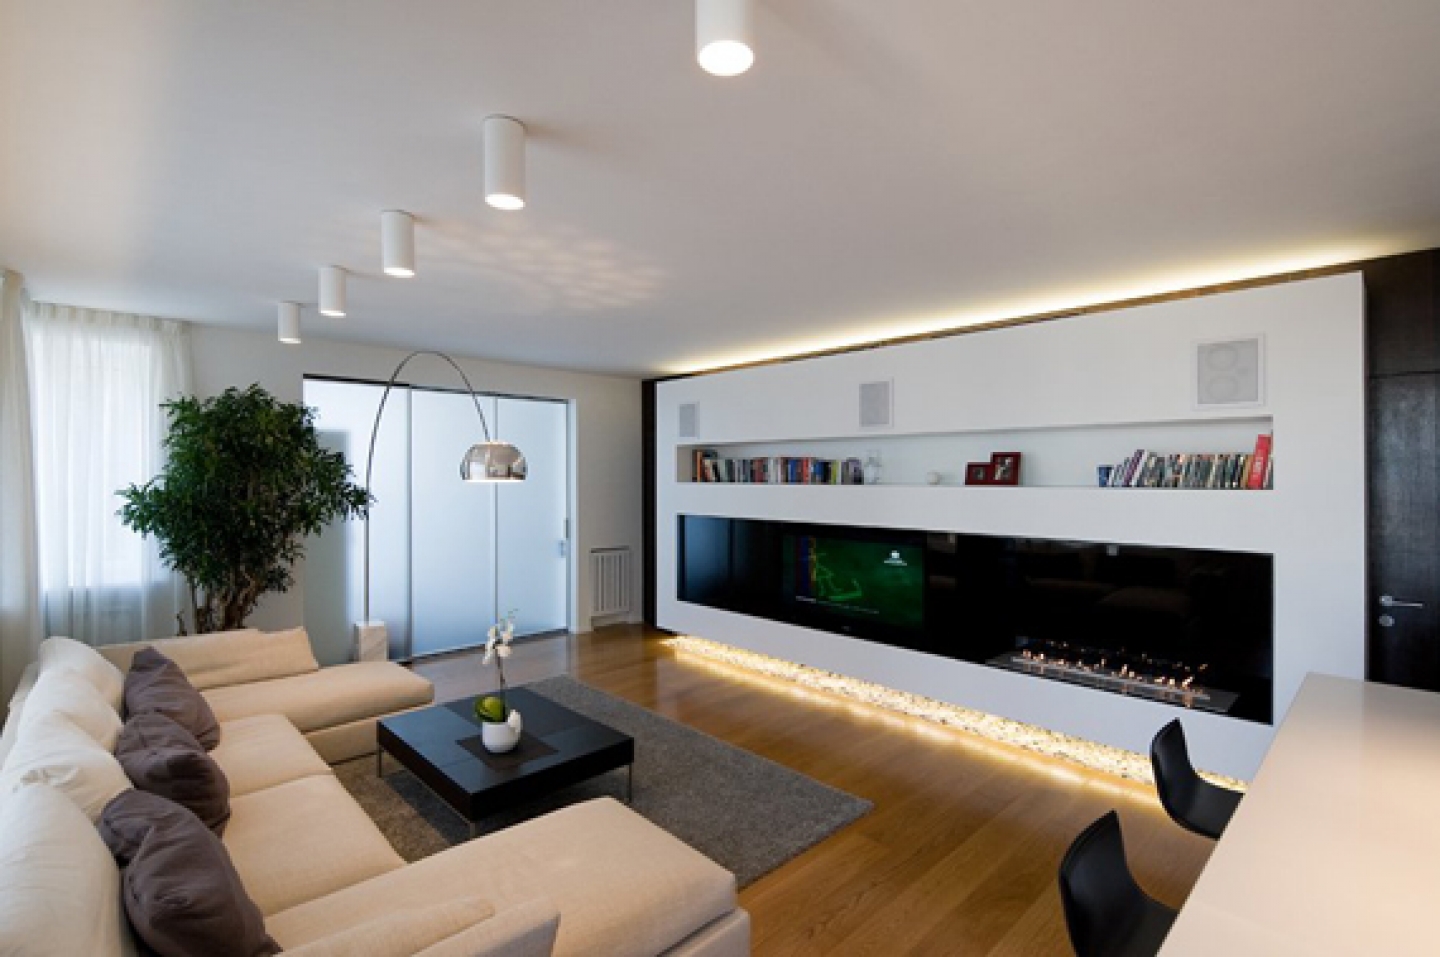 10 Inspirational Ways To Illuminate Your Living Room